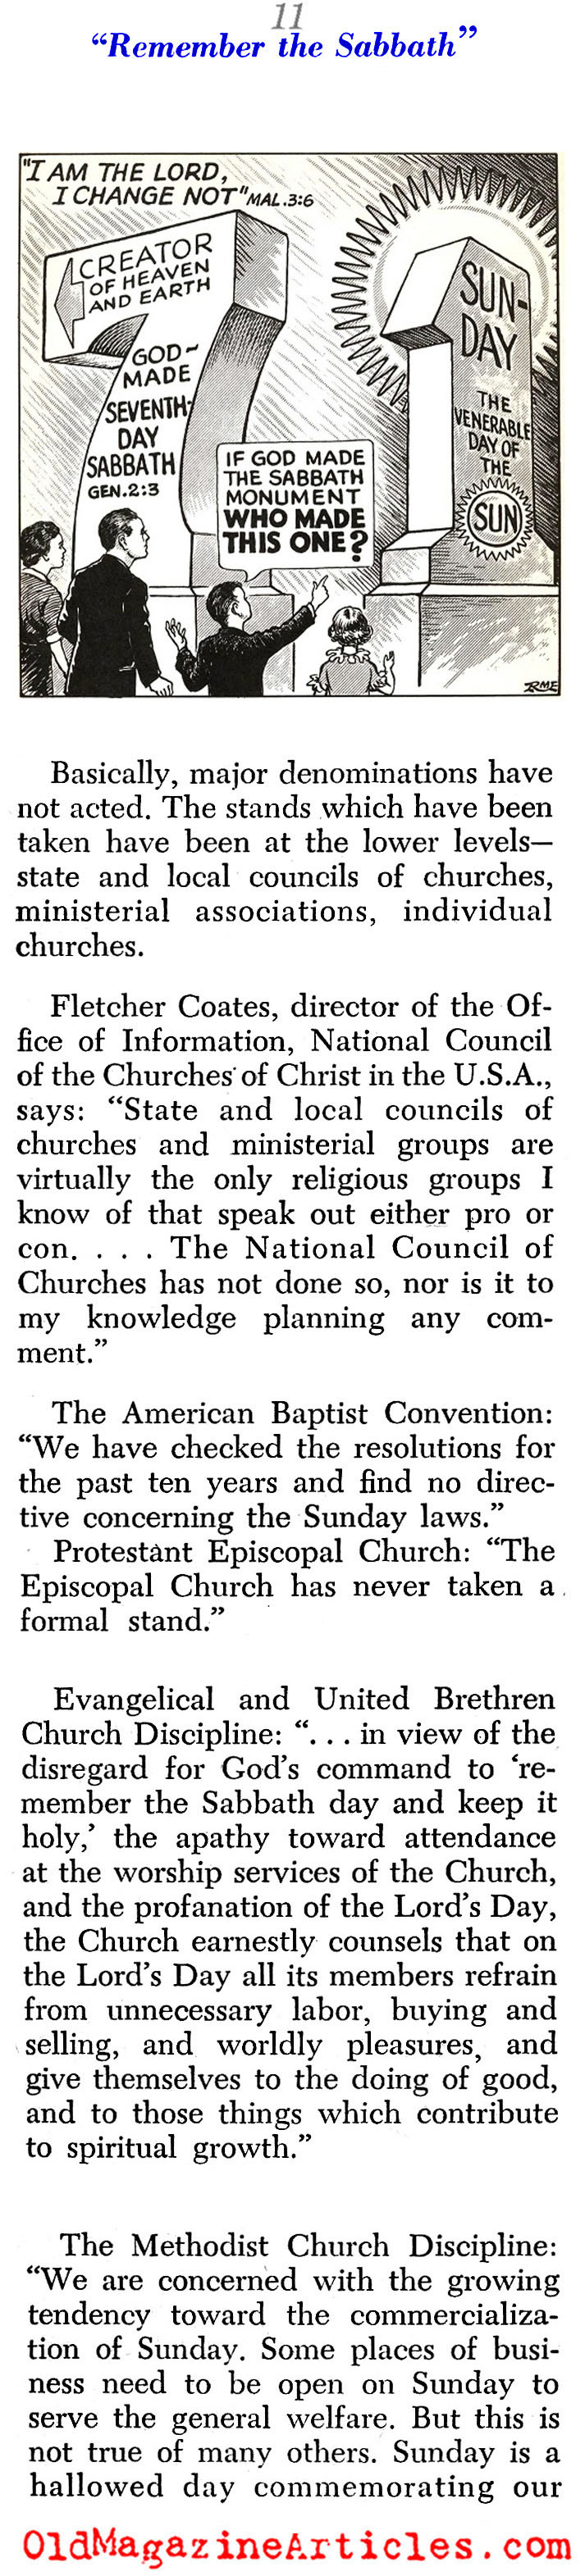 Sabbath Challenges (Christian Herald, 1963)